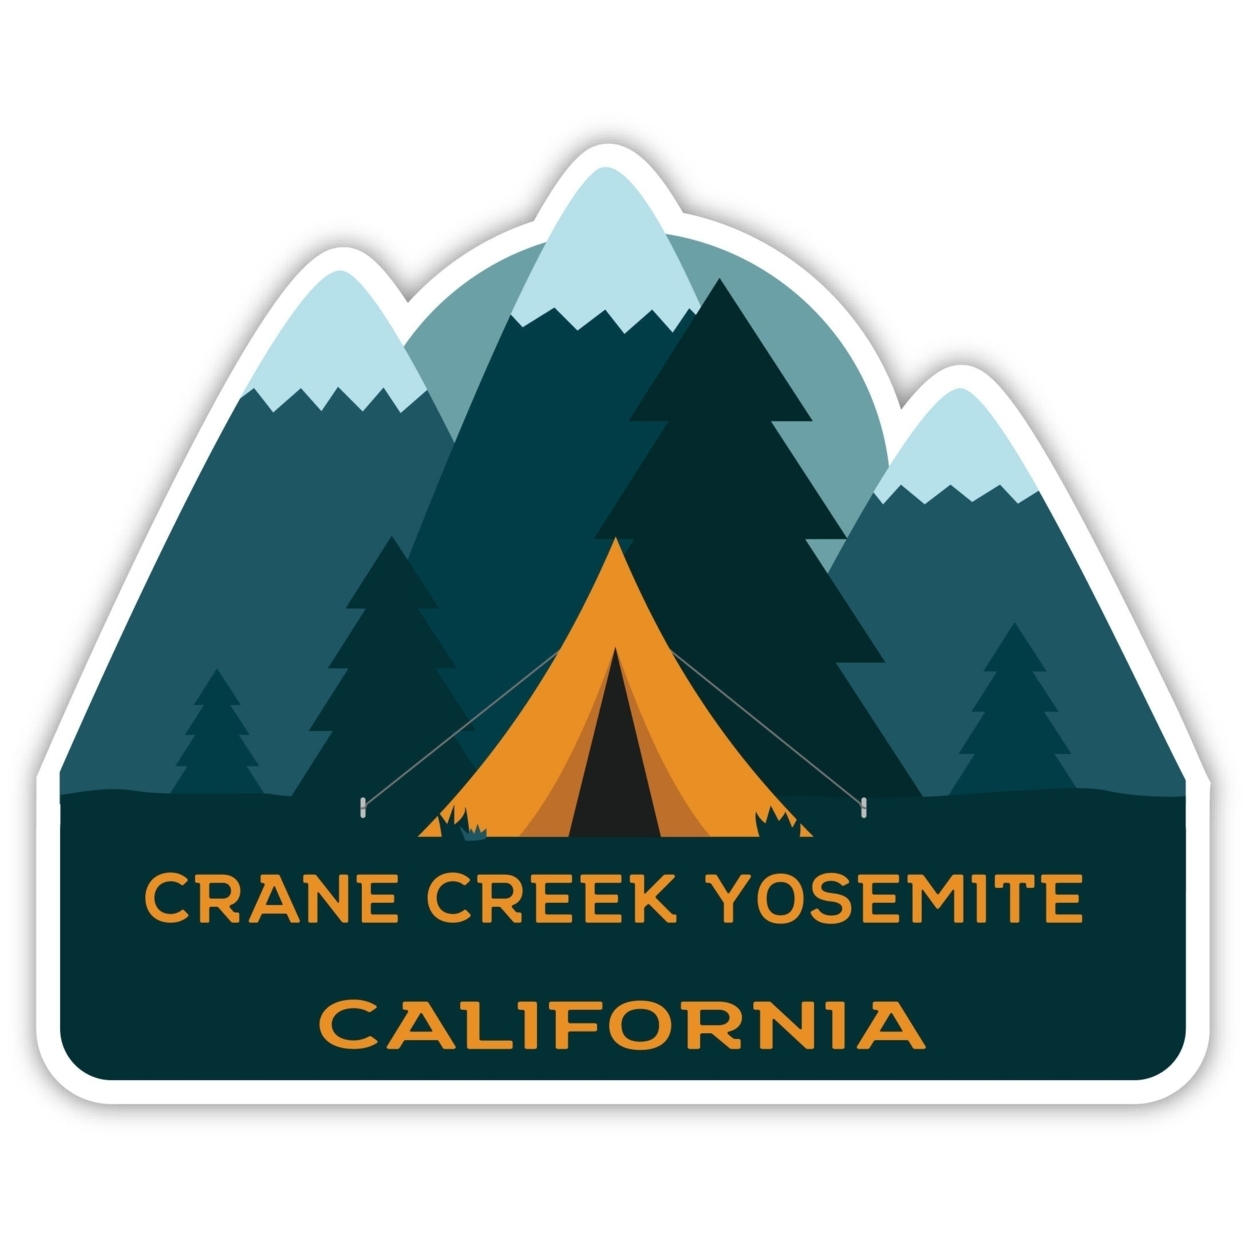 Crane Creek Yosemite California Souvenir Decorative Stickers (Choose Theme And Size) - Single Unit, 4-Inch, Tent